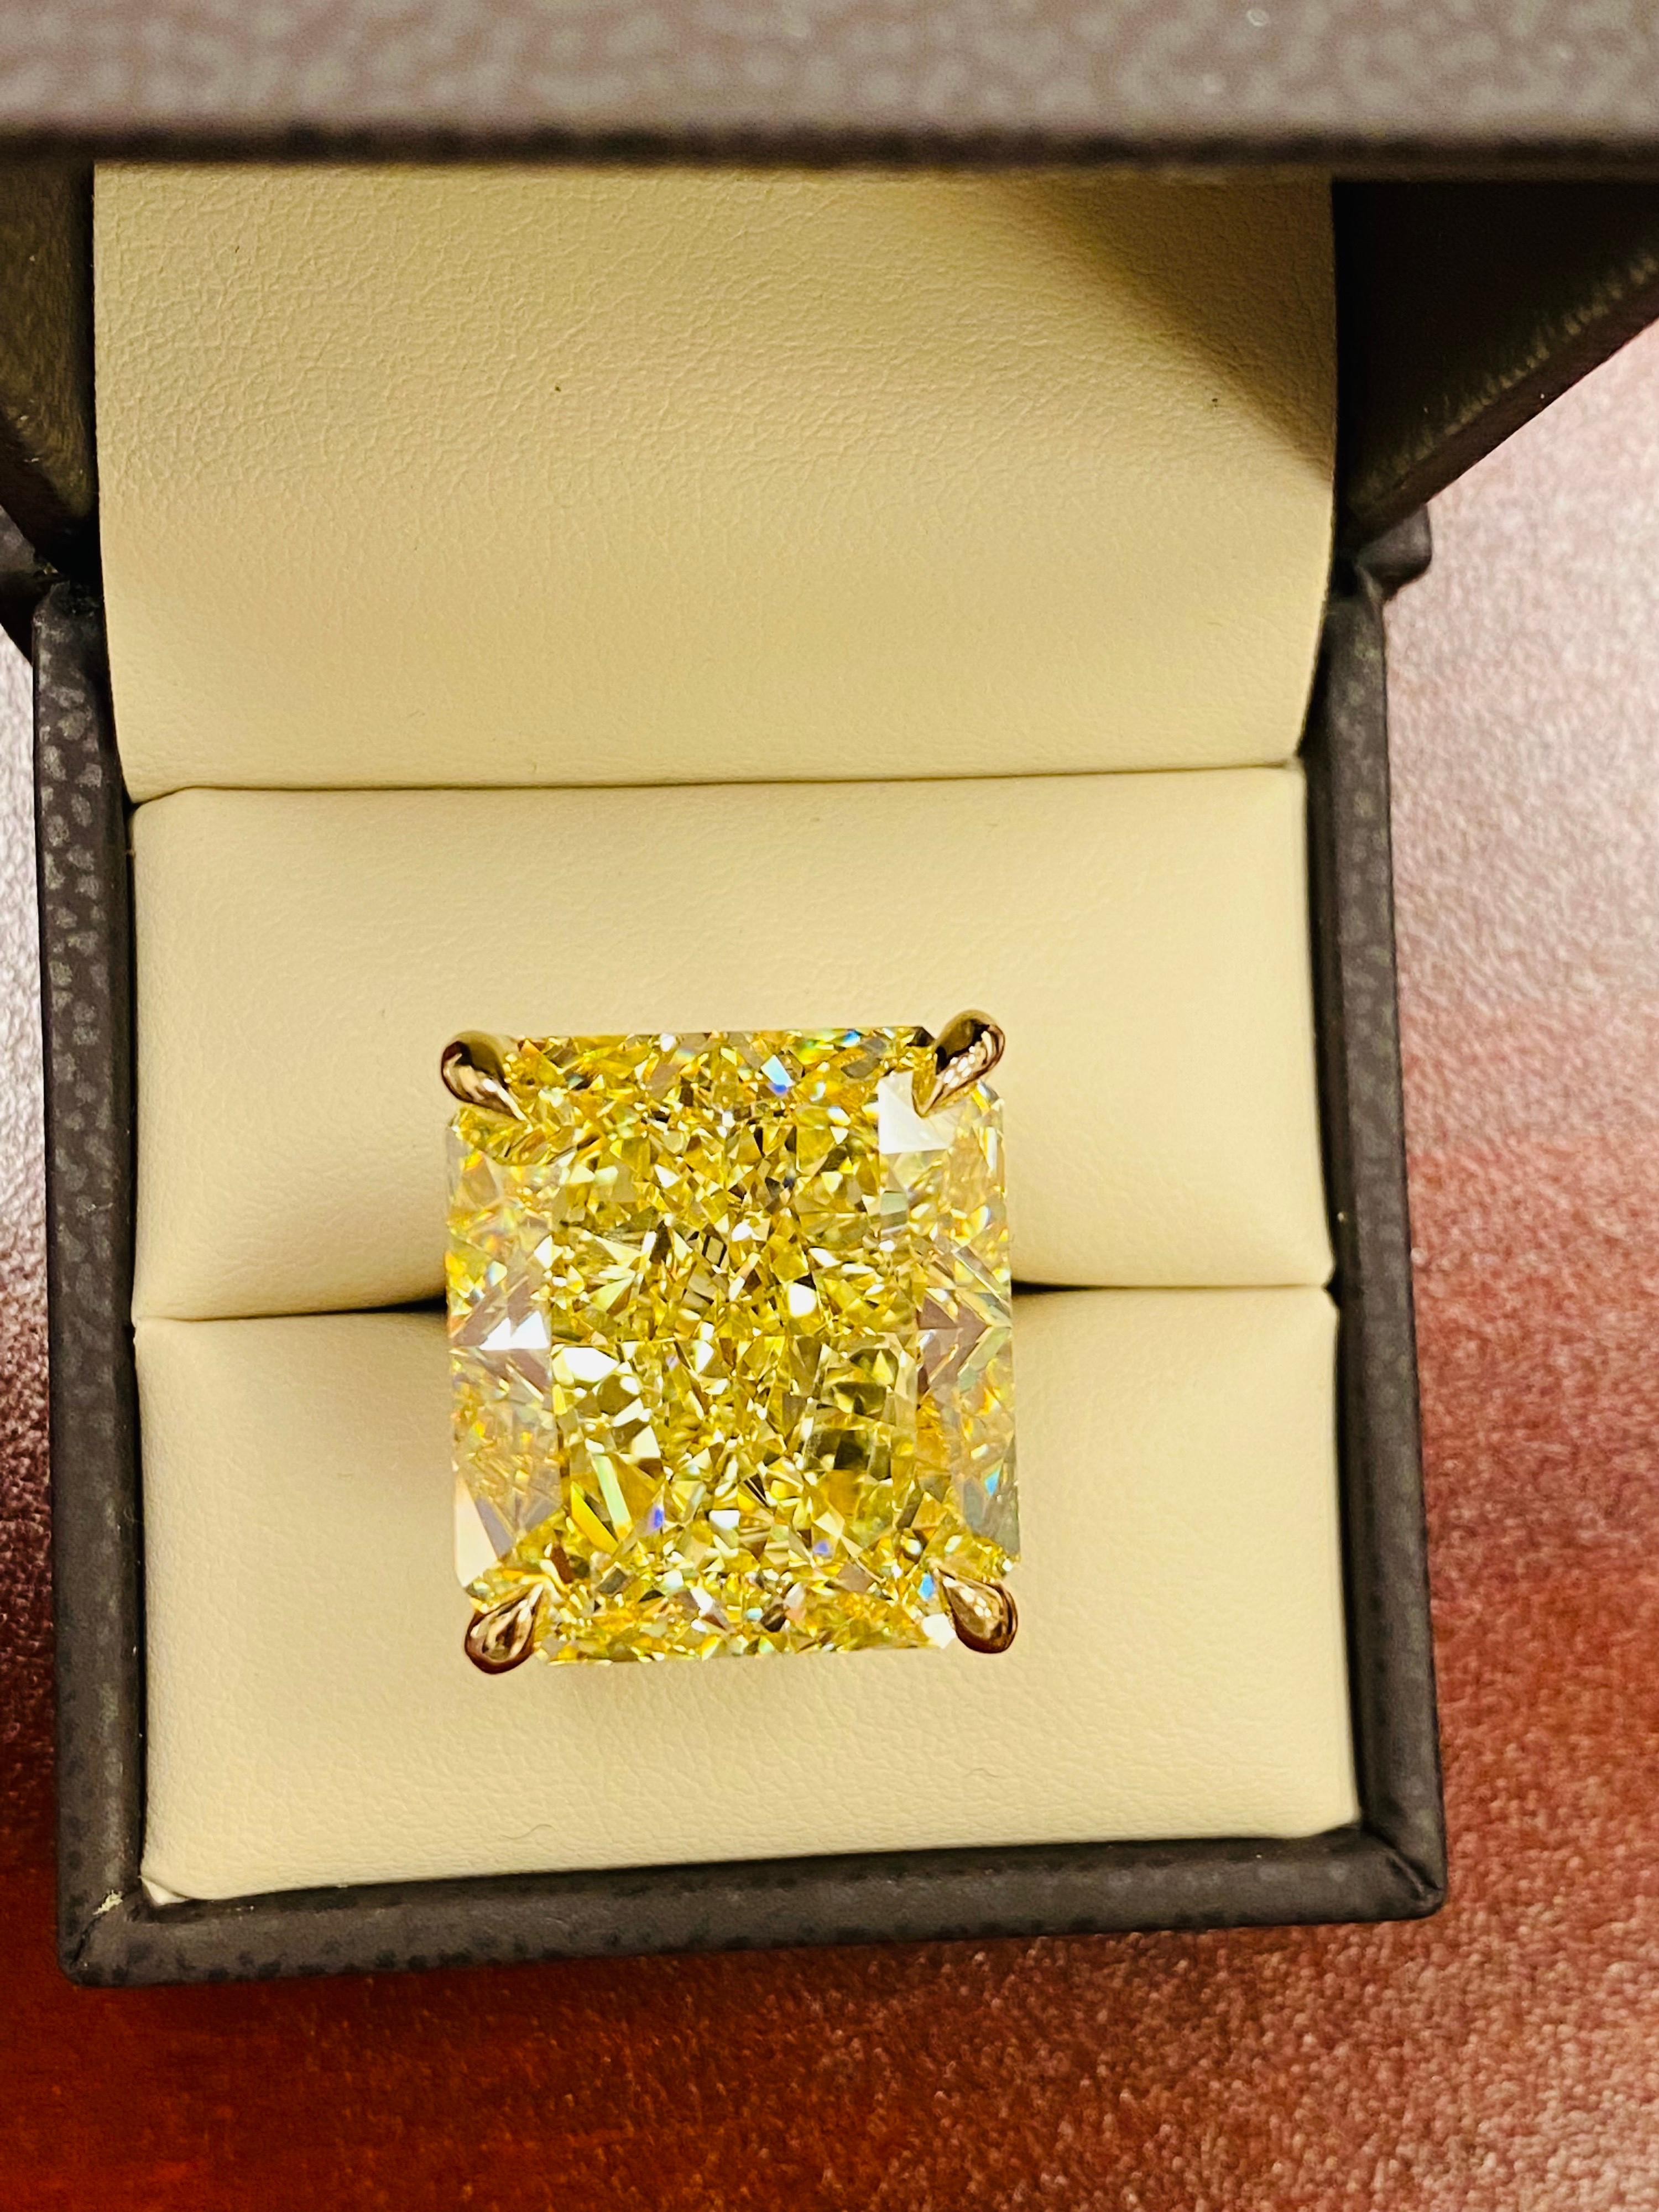 Radiant Cut Emilio Jewelry Gia Certified 41.00 Carat Fancy Intense Yellow Diamond Ring For Sale